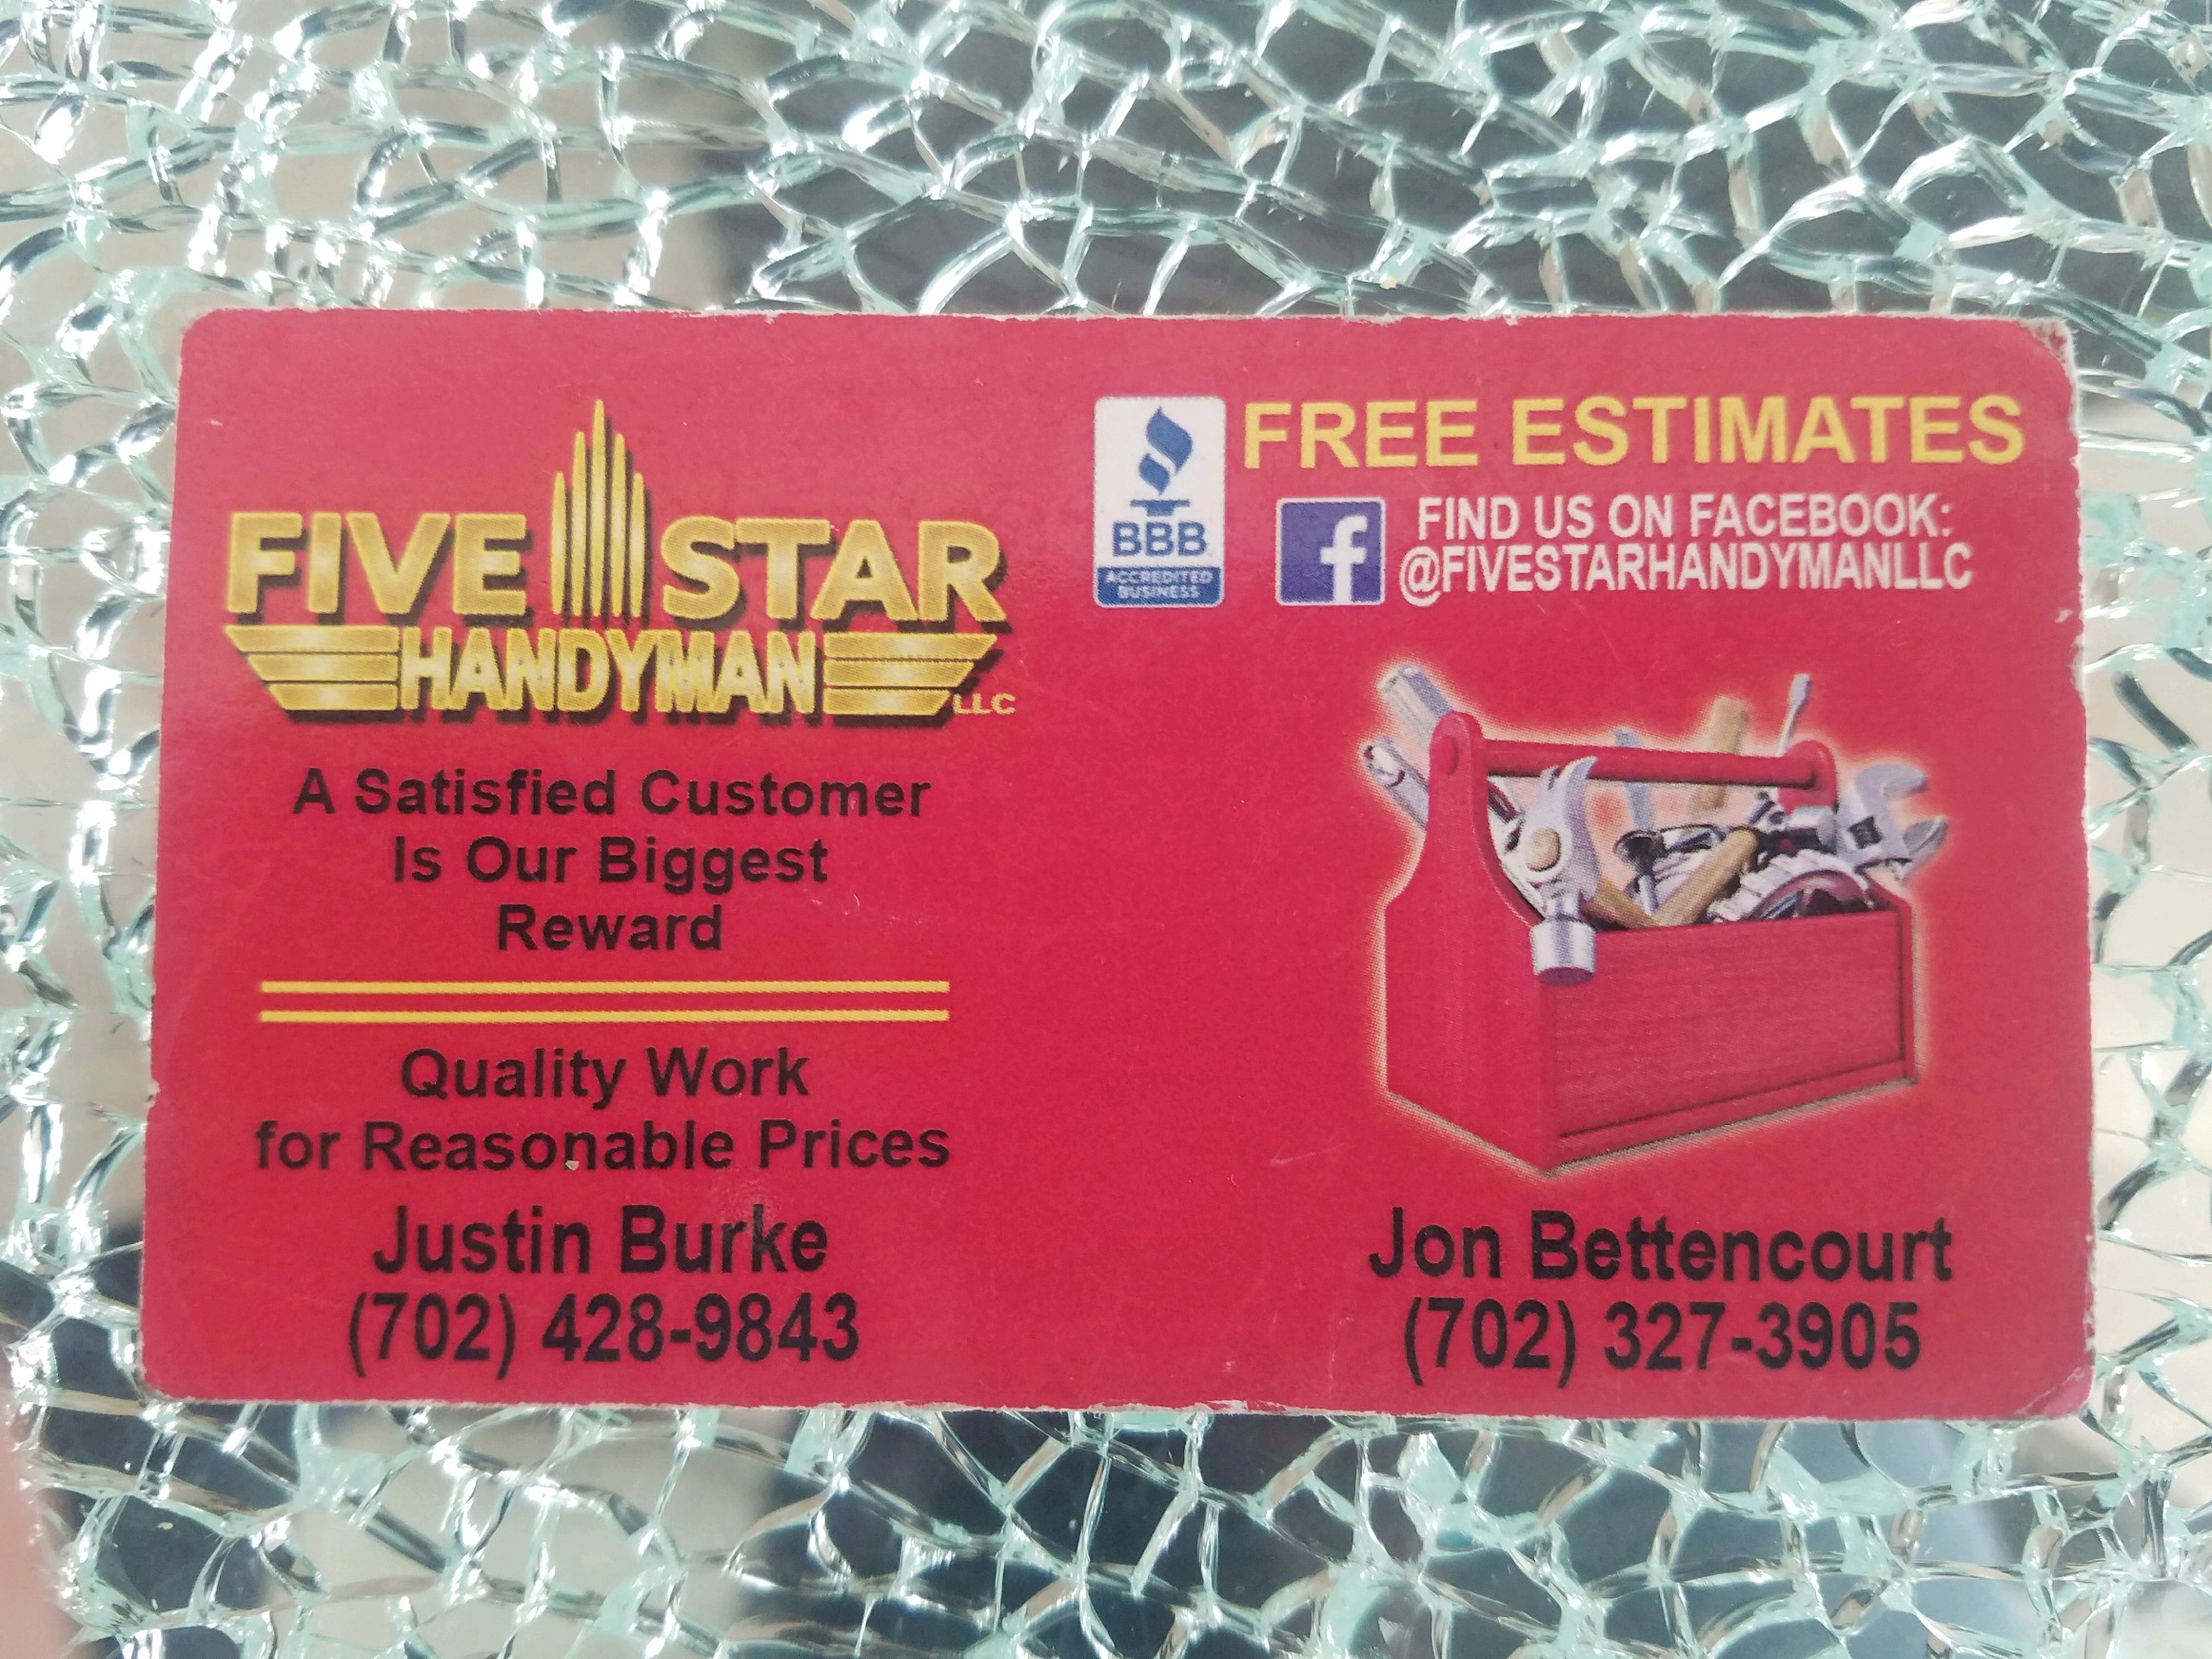 Five Star Handyman (Jon Bettencourt)business card